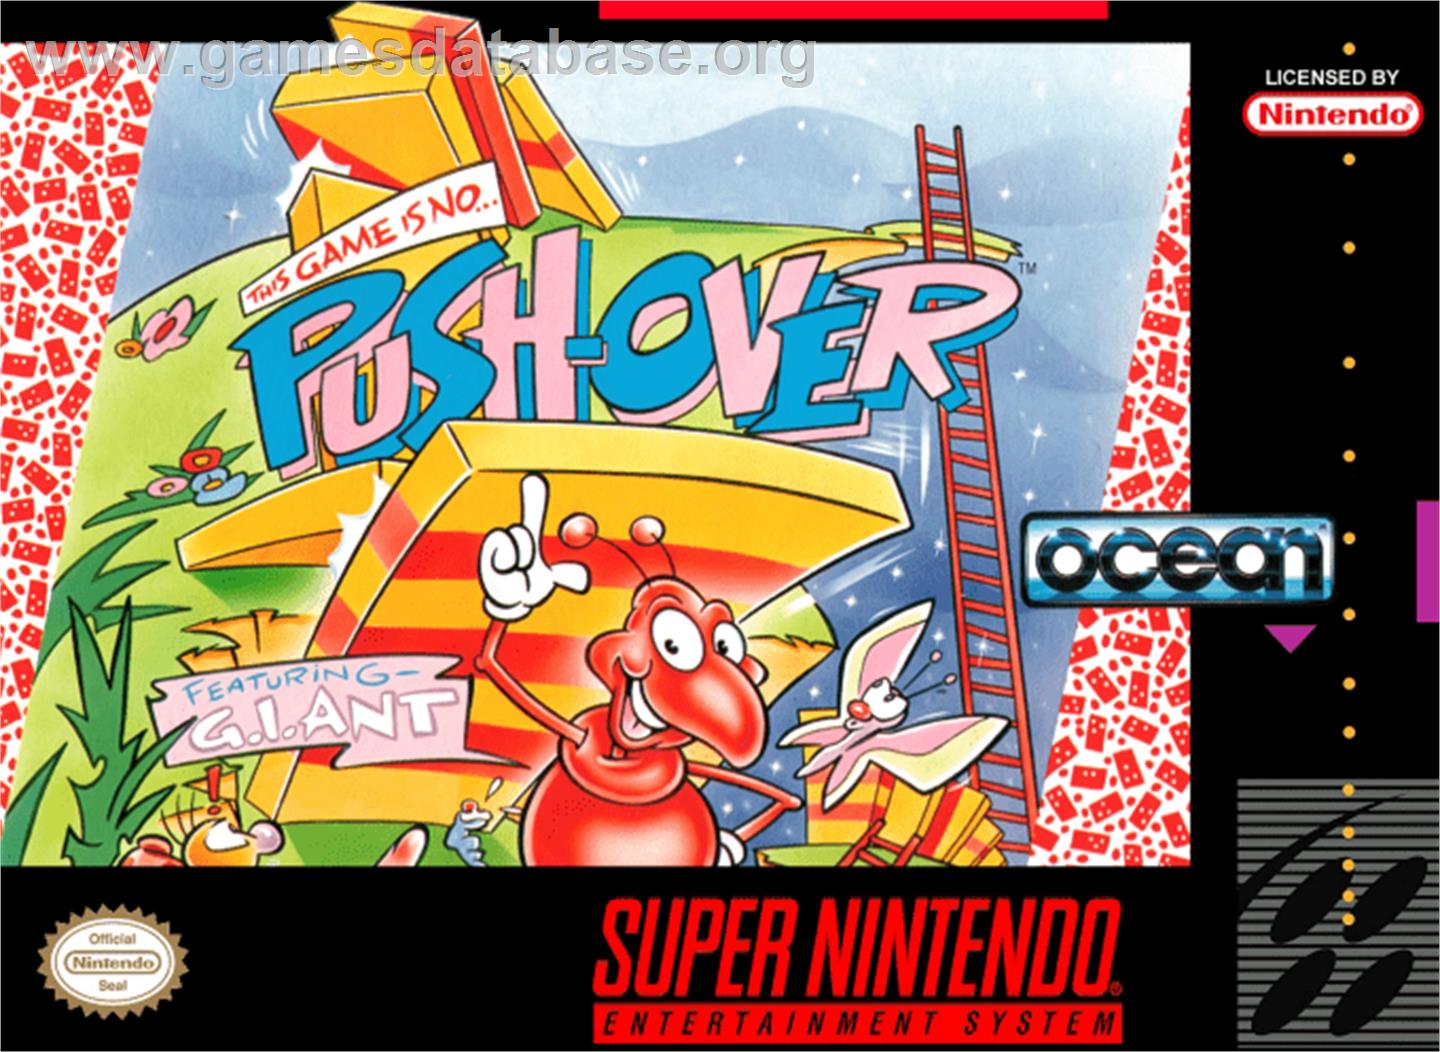 Push-Over - Nintendo SNES - Artwork - Box